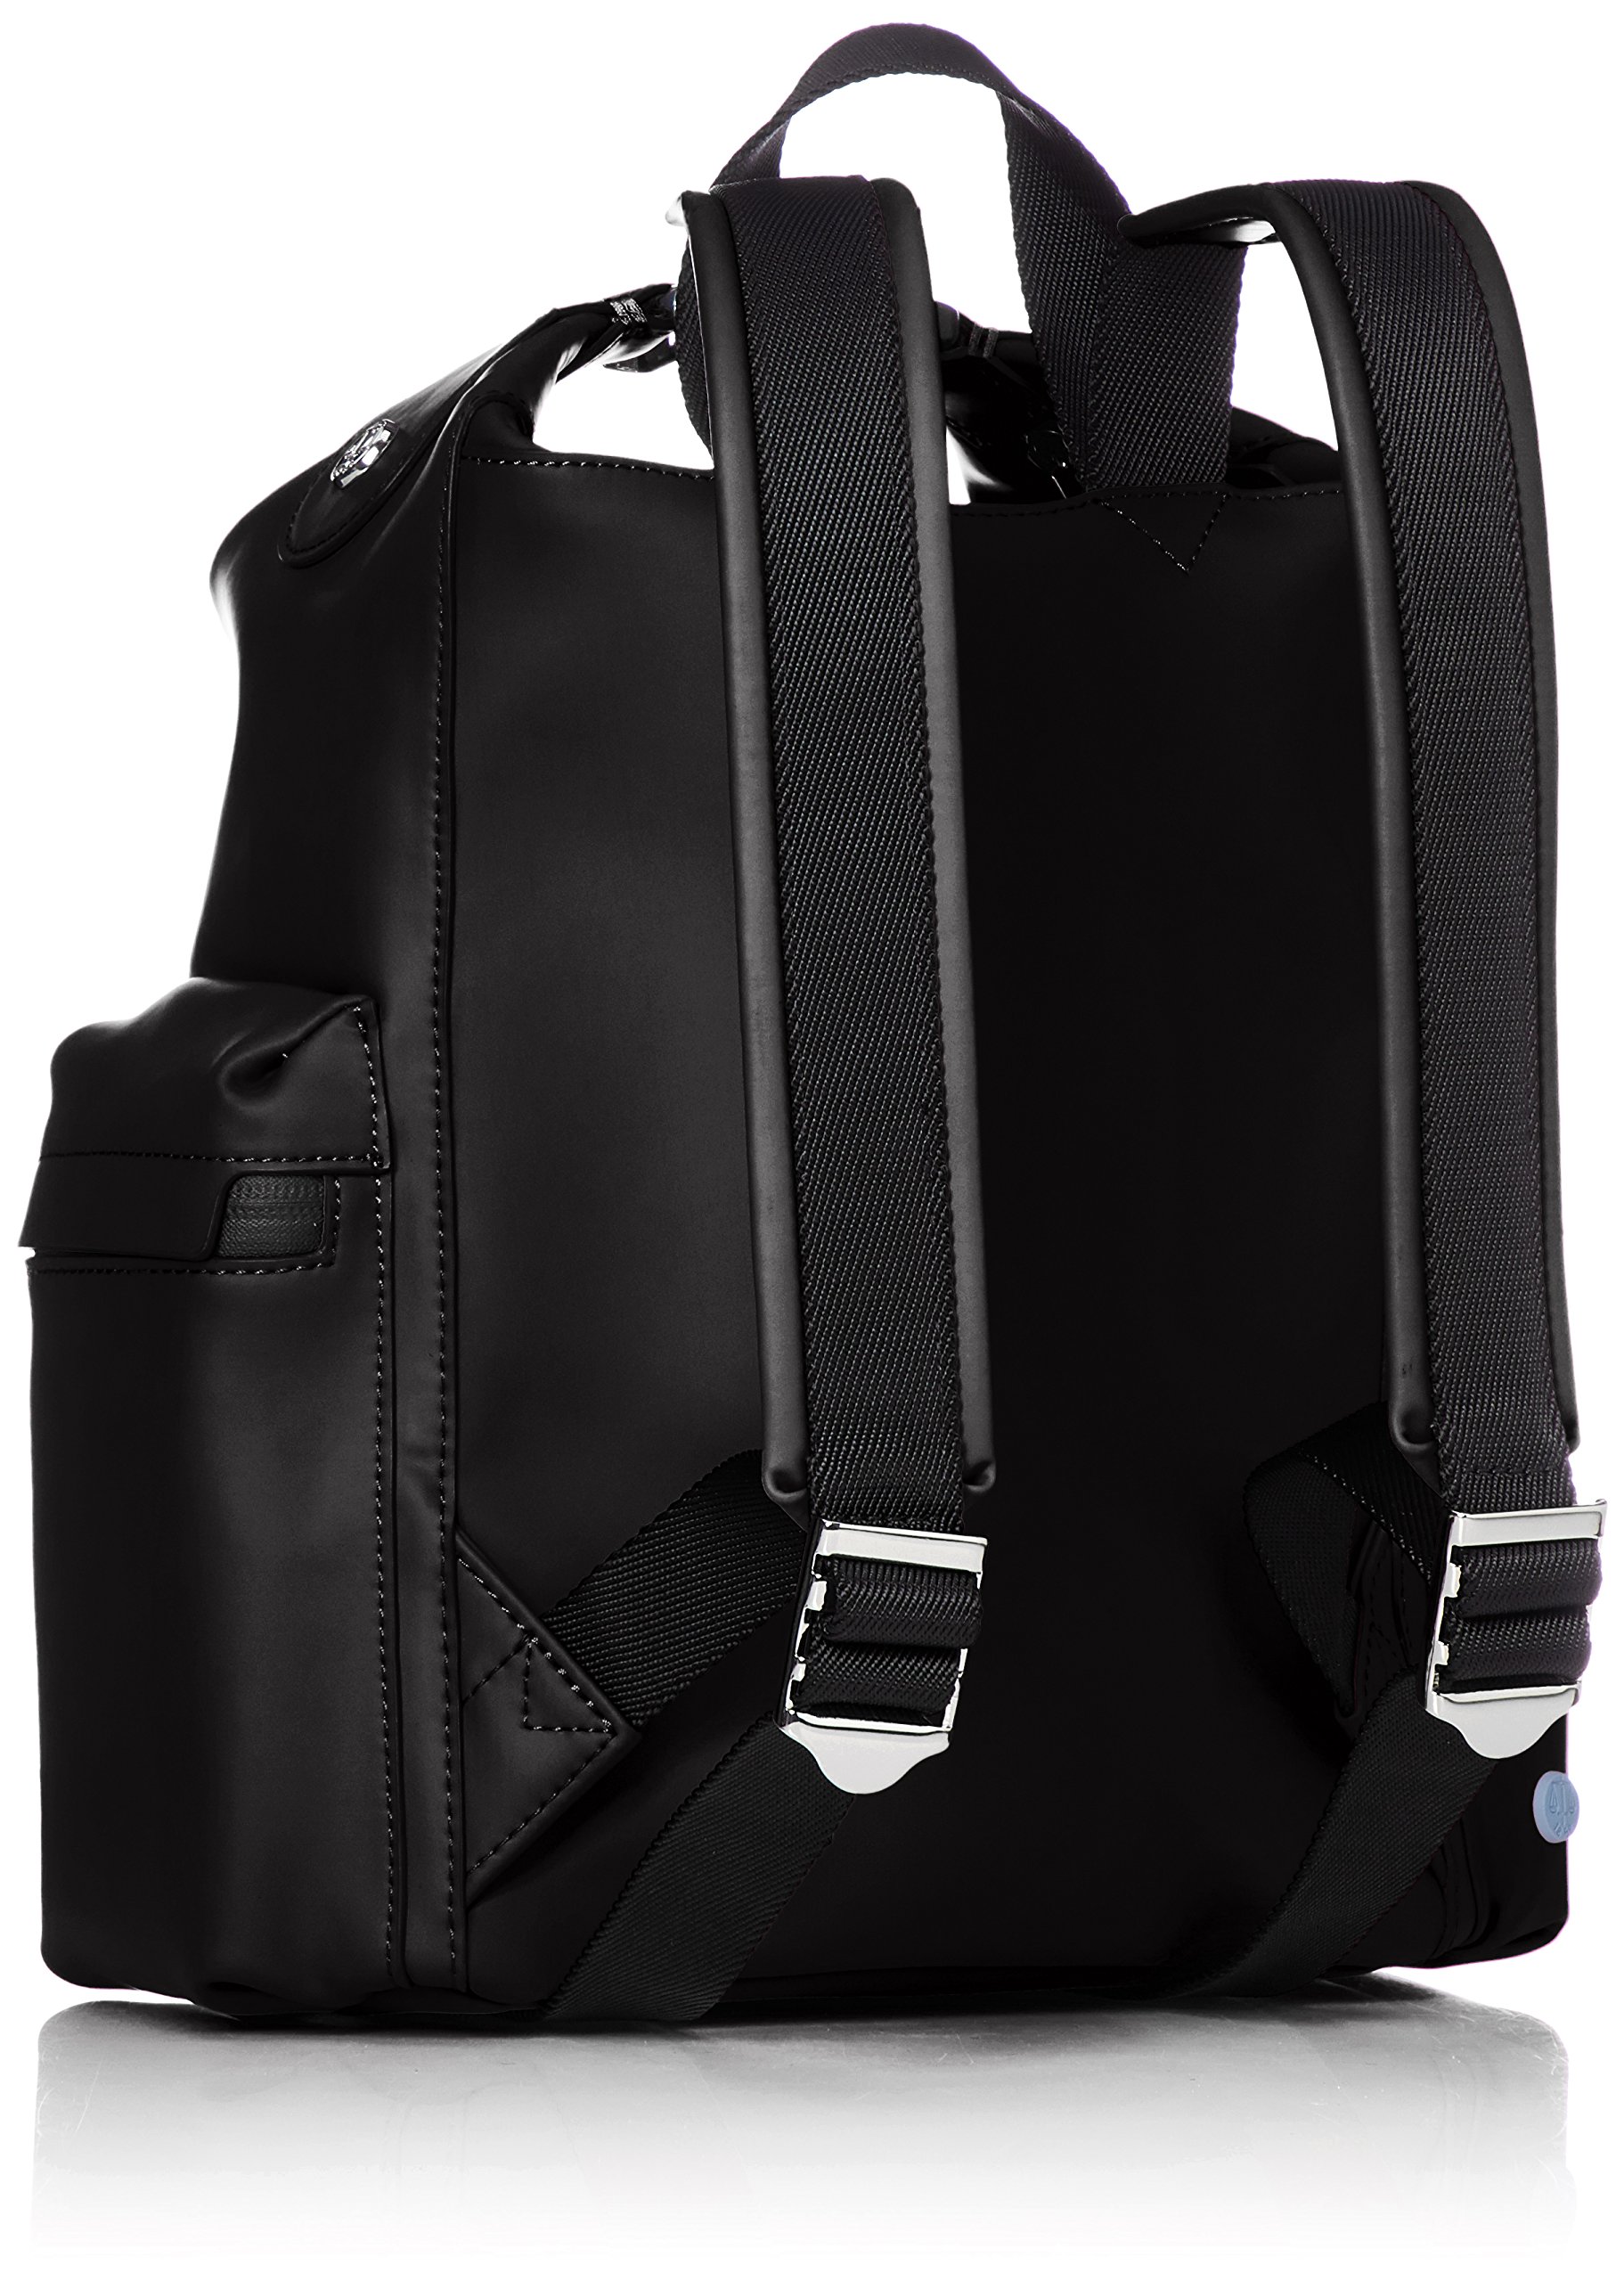 Hunter Original Mini Top Clip Rubberized Leather Backpack